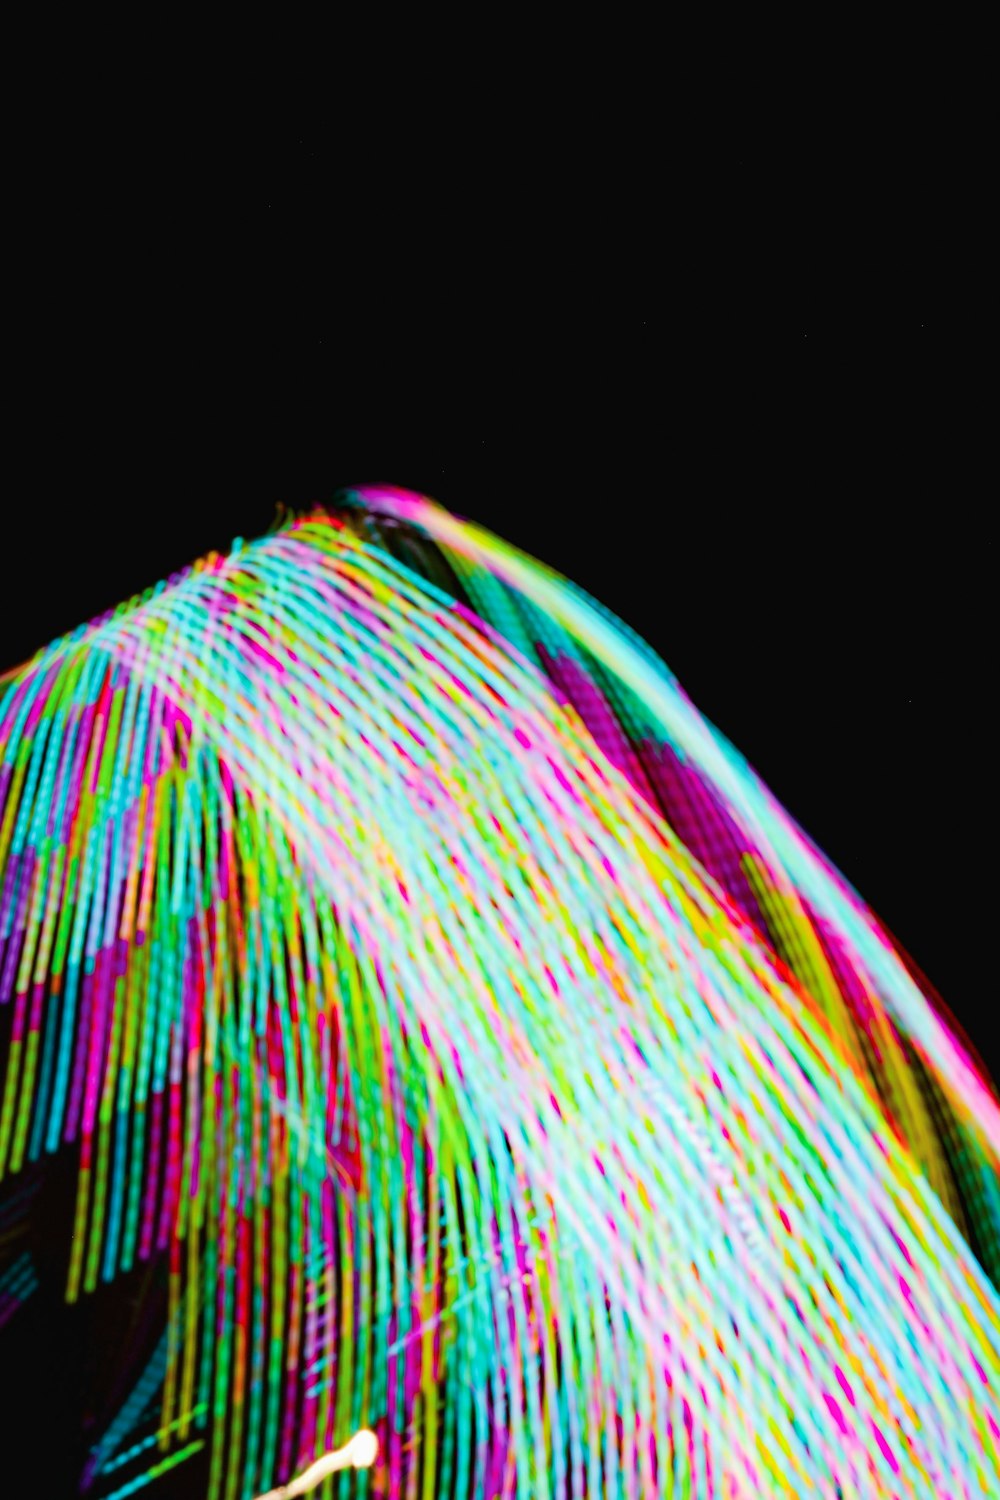 a blurry photo of a colorful umbrella in the dark